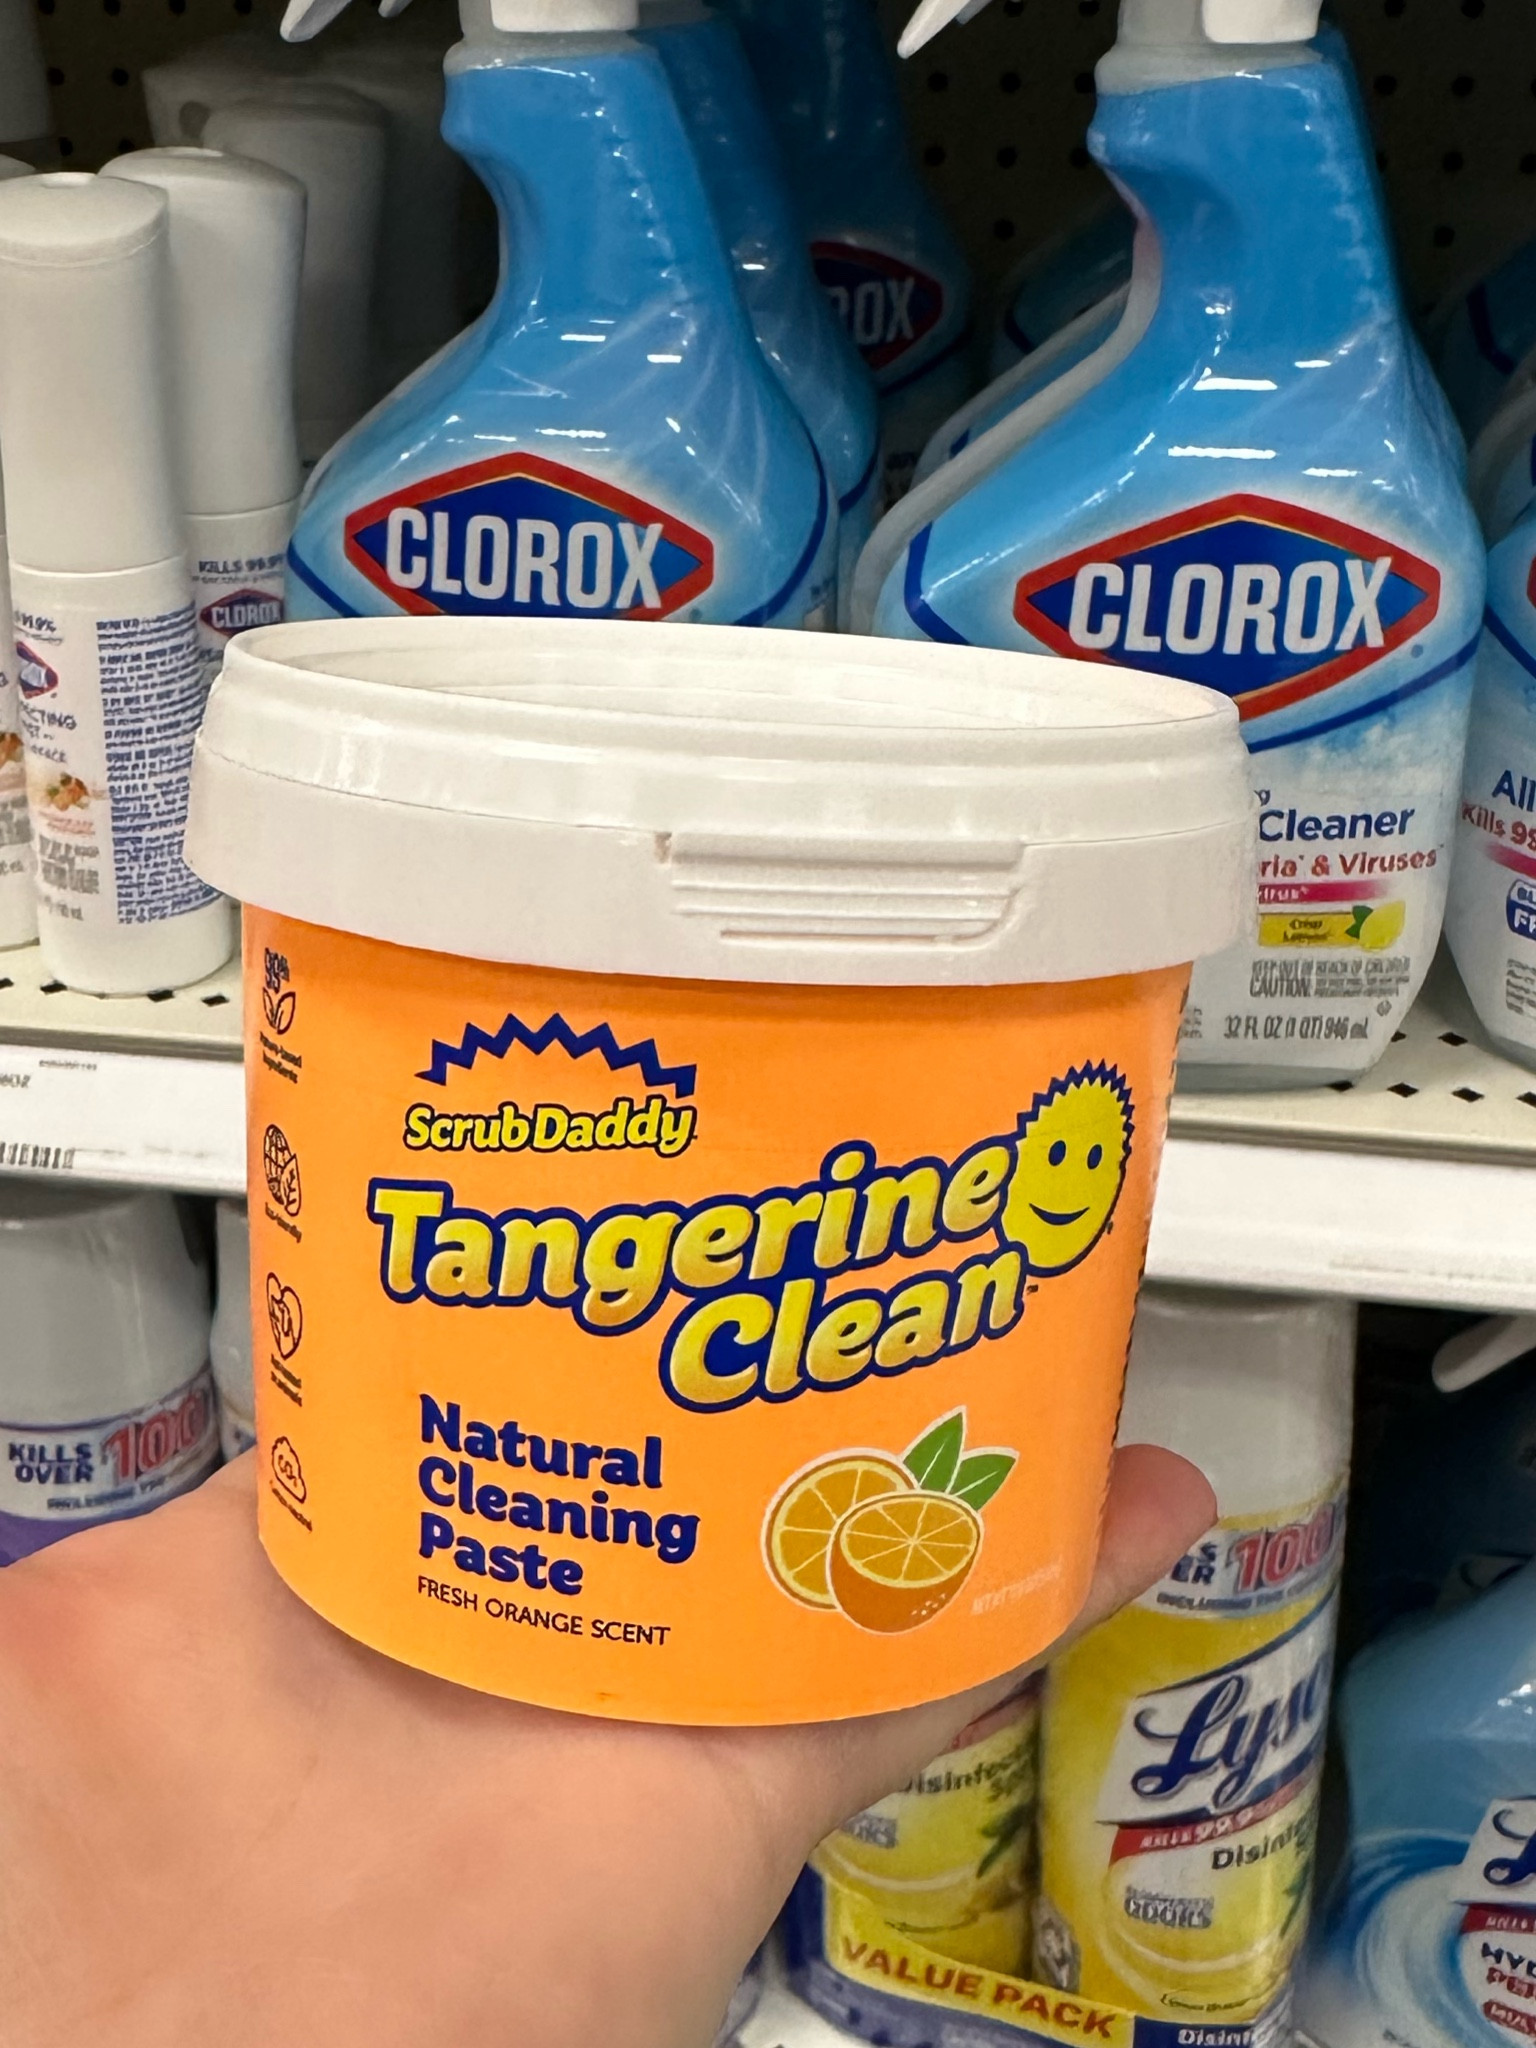 Tangerine Clean Paste by Scrub Daddy